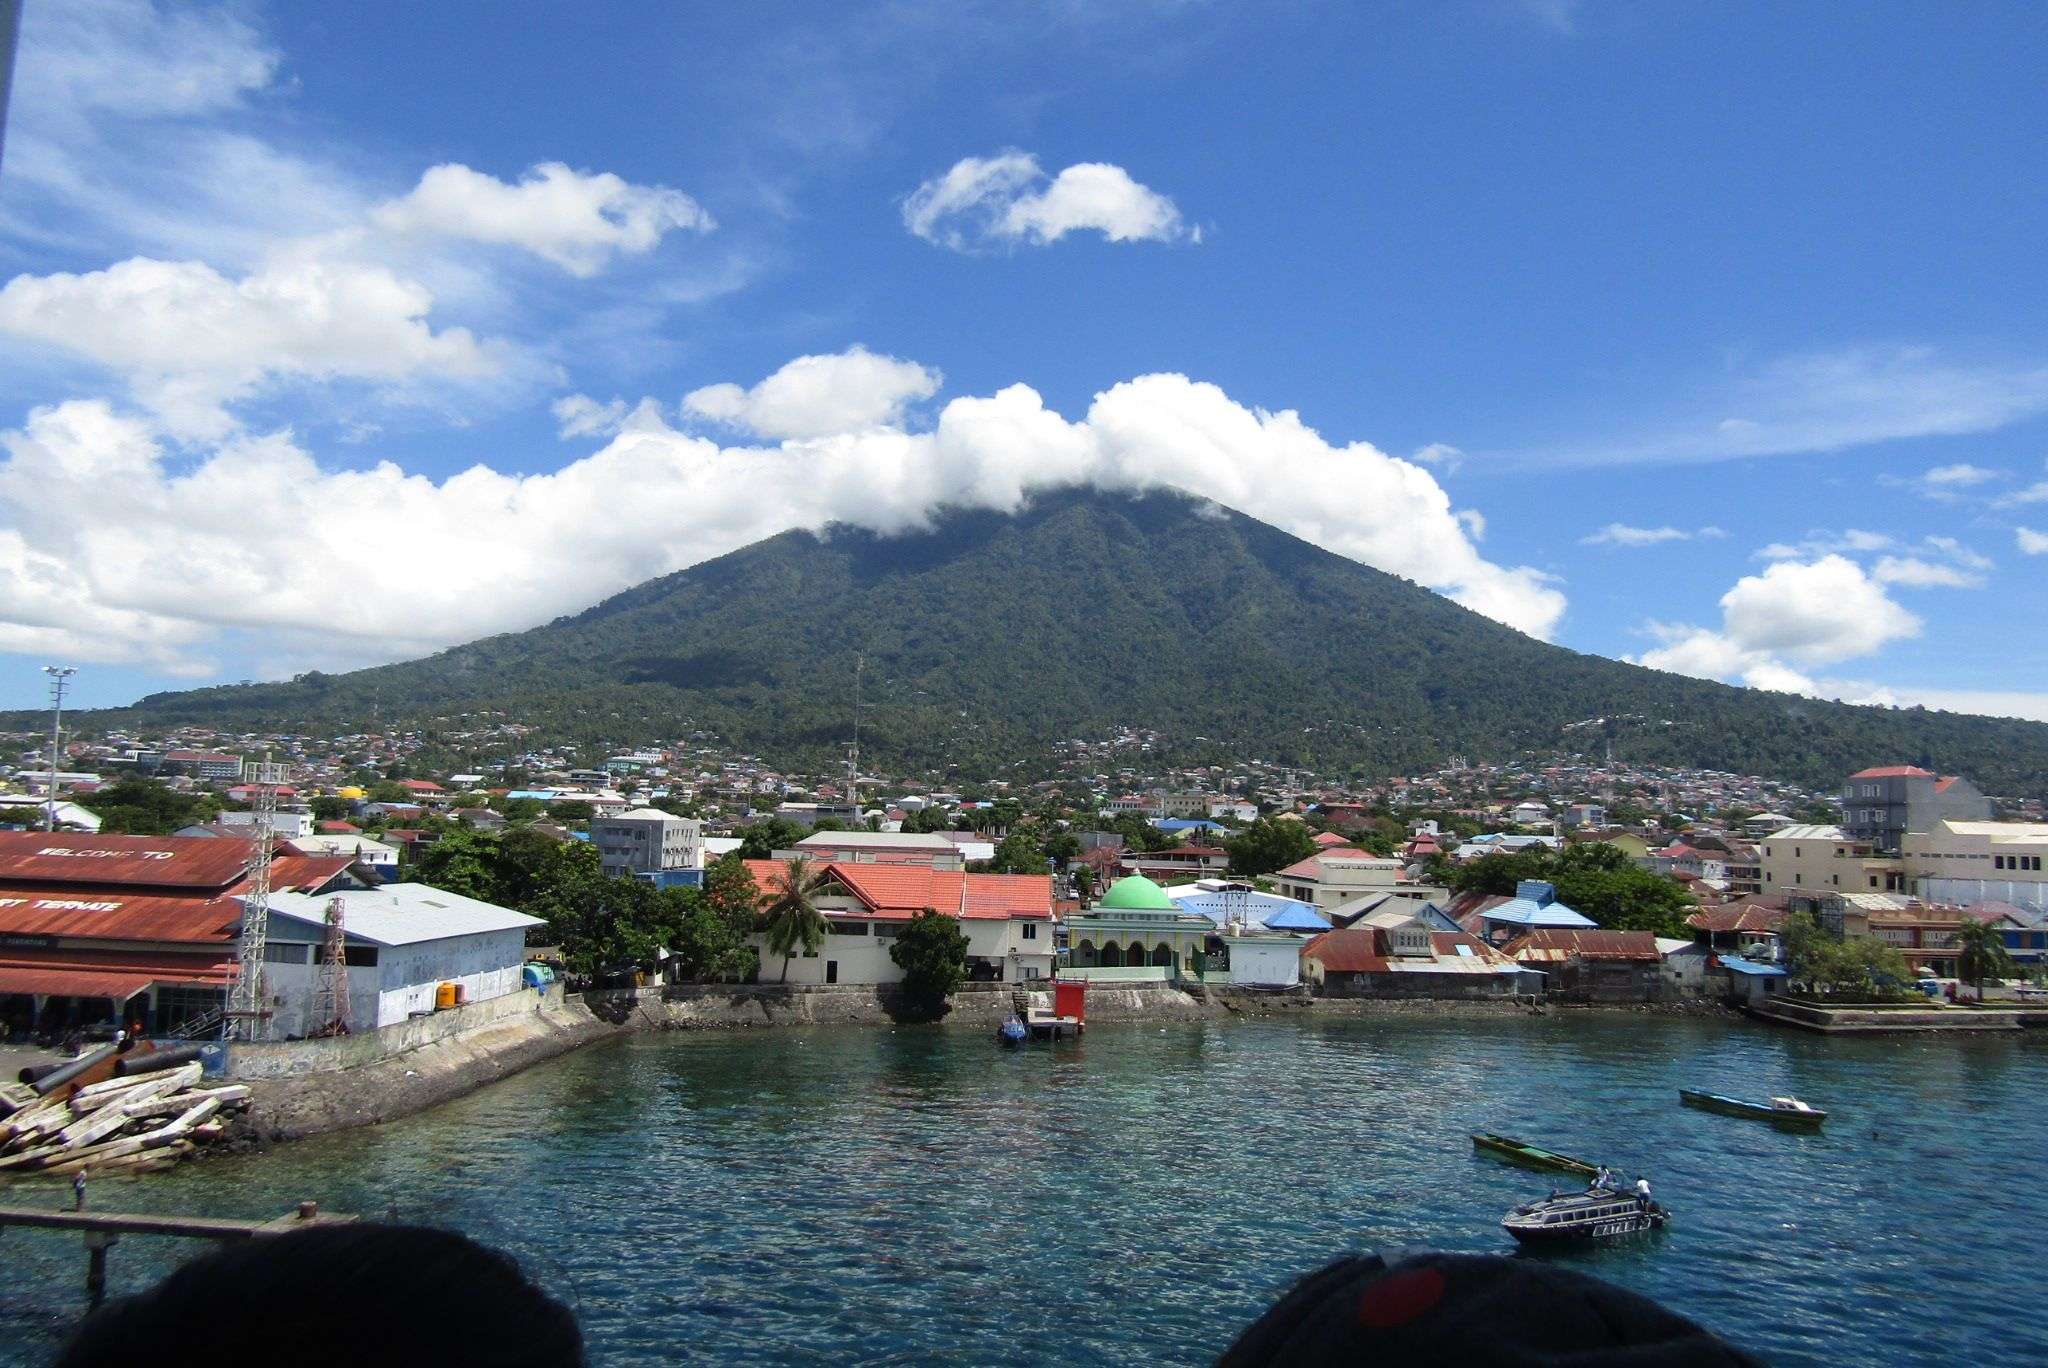 Gamalama mountain in Ternate City